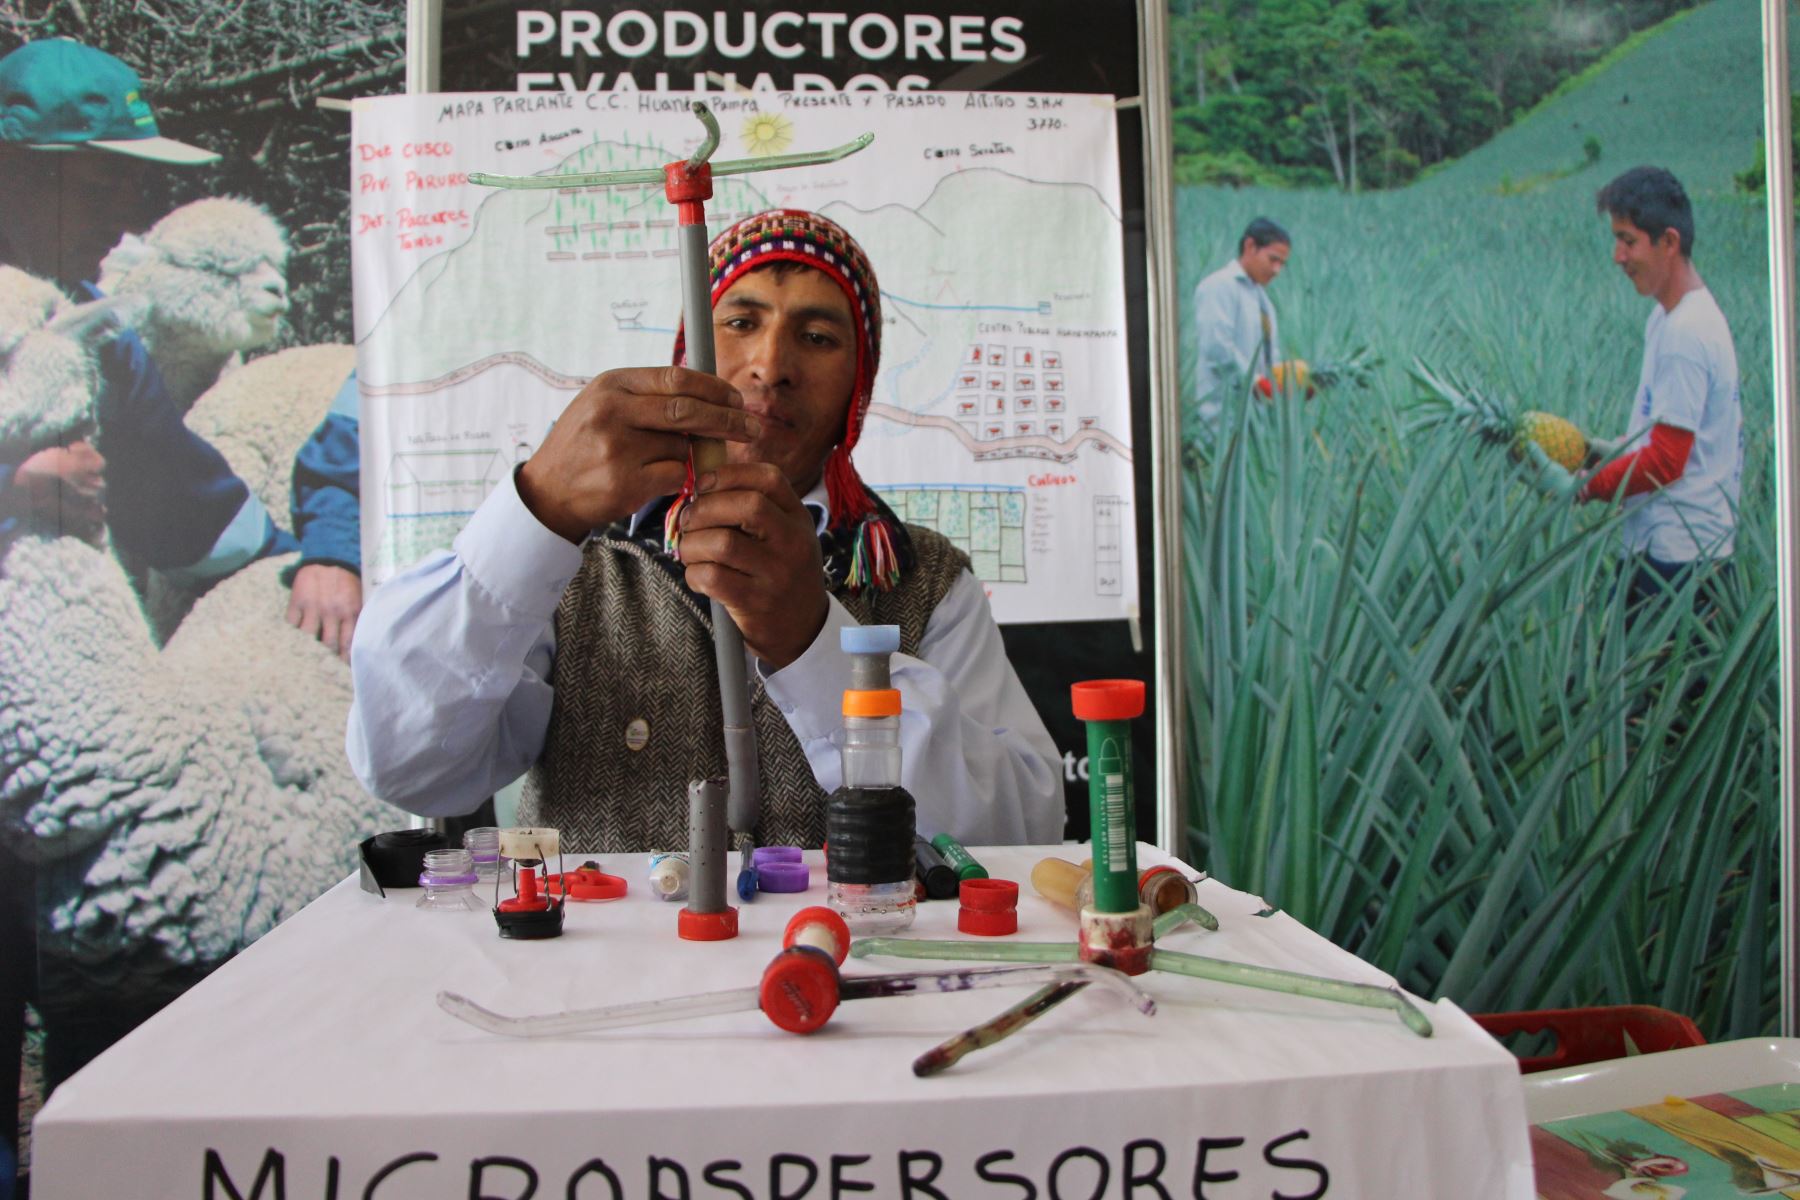 Talentos rurales de Junín, Huancavelica y Cusco participan en feria de innovación agraria. ANDINA/Difusión